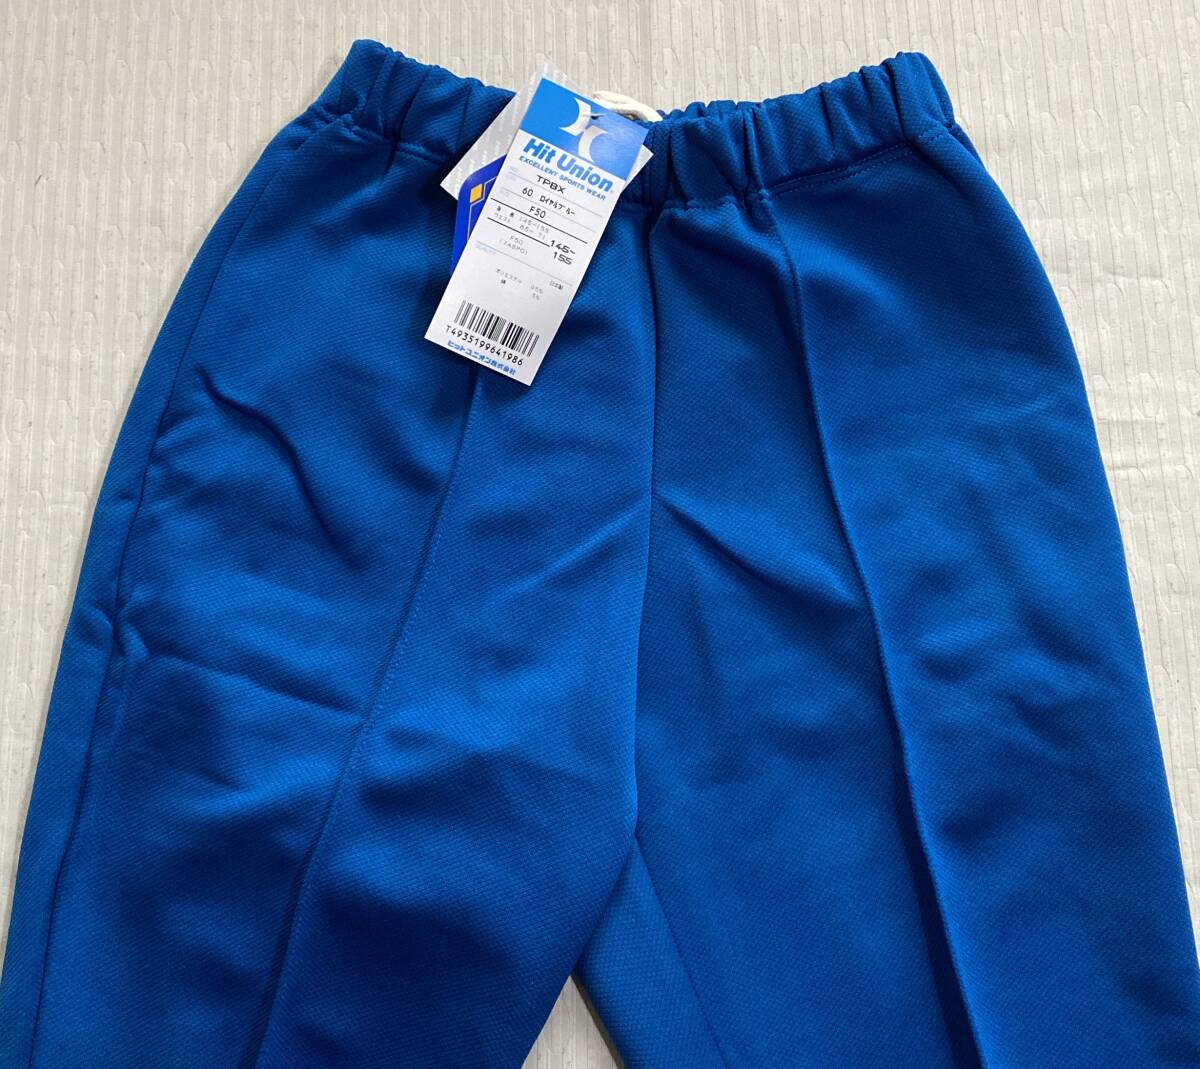  jersey under / training pants hit Union /Hit Union 150 size Junior waist 65-71m height 145-155 royal blue color ^v unused goods 